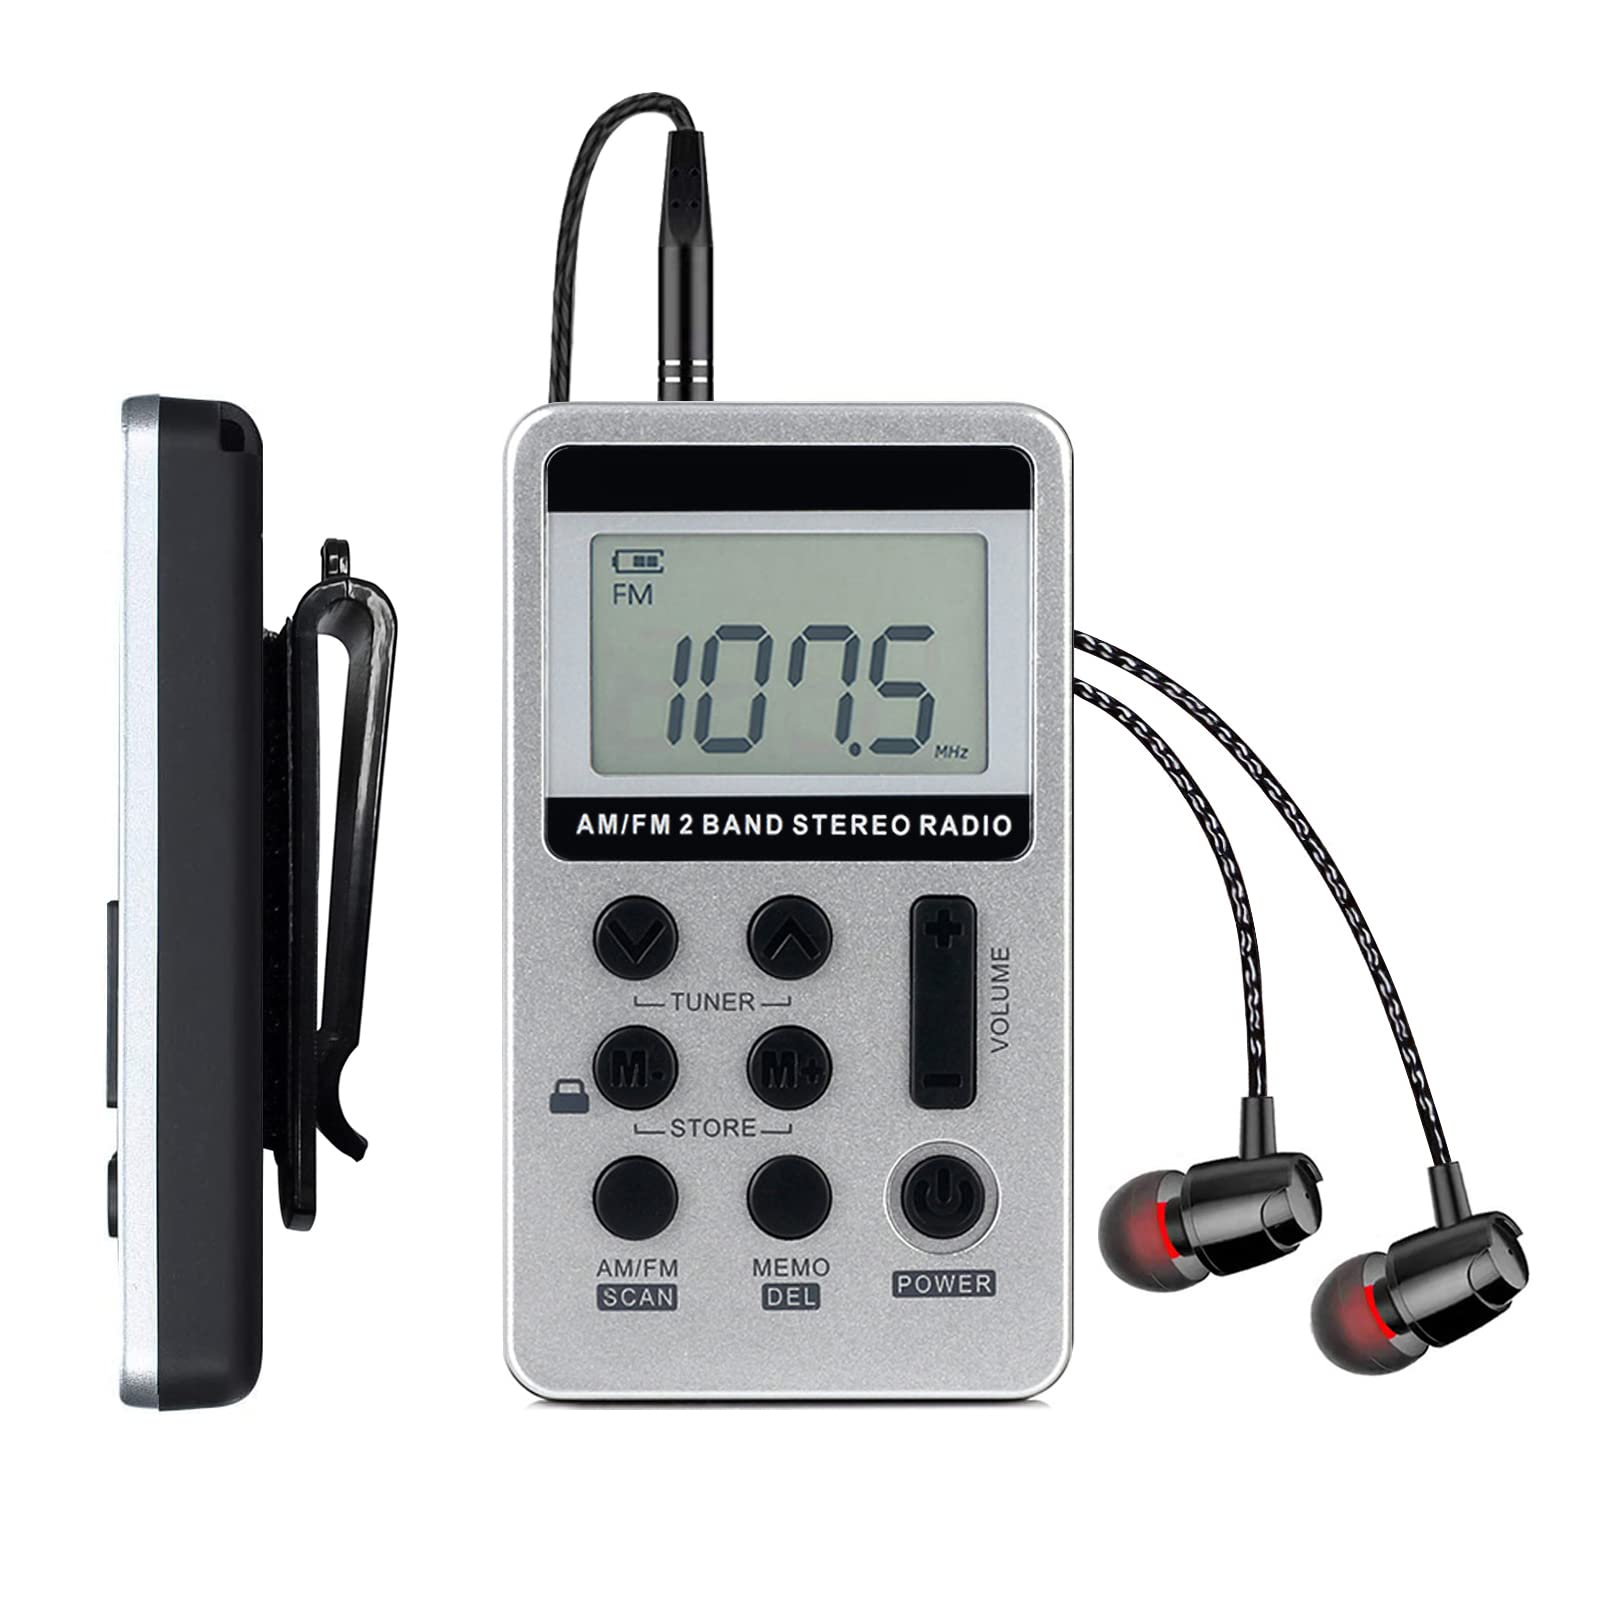 SWDSTP Portable AM FM Radio, Walkman Radio with Digital Tuning LcD Display, Rechargeable Pocket Radio with Earphone, Small Radio